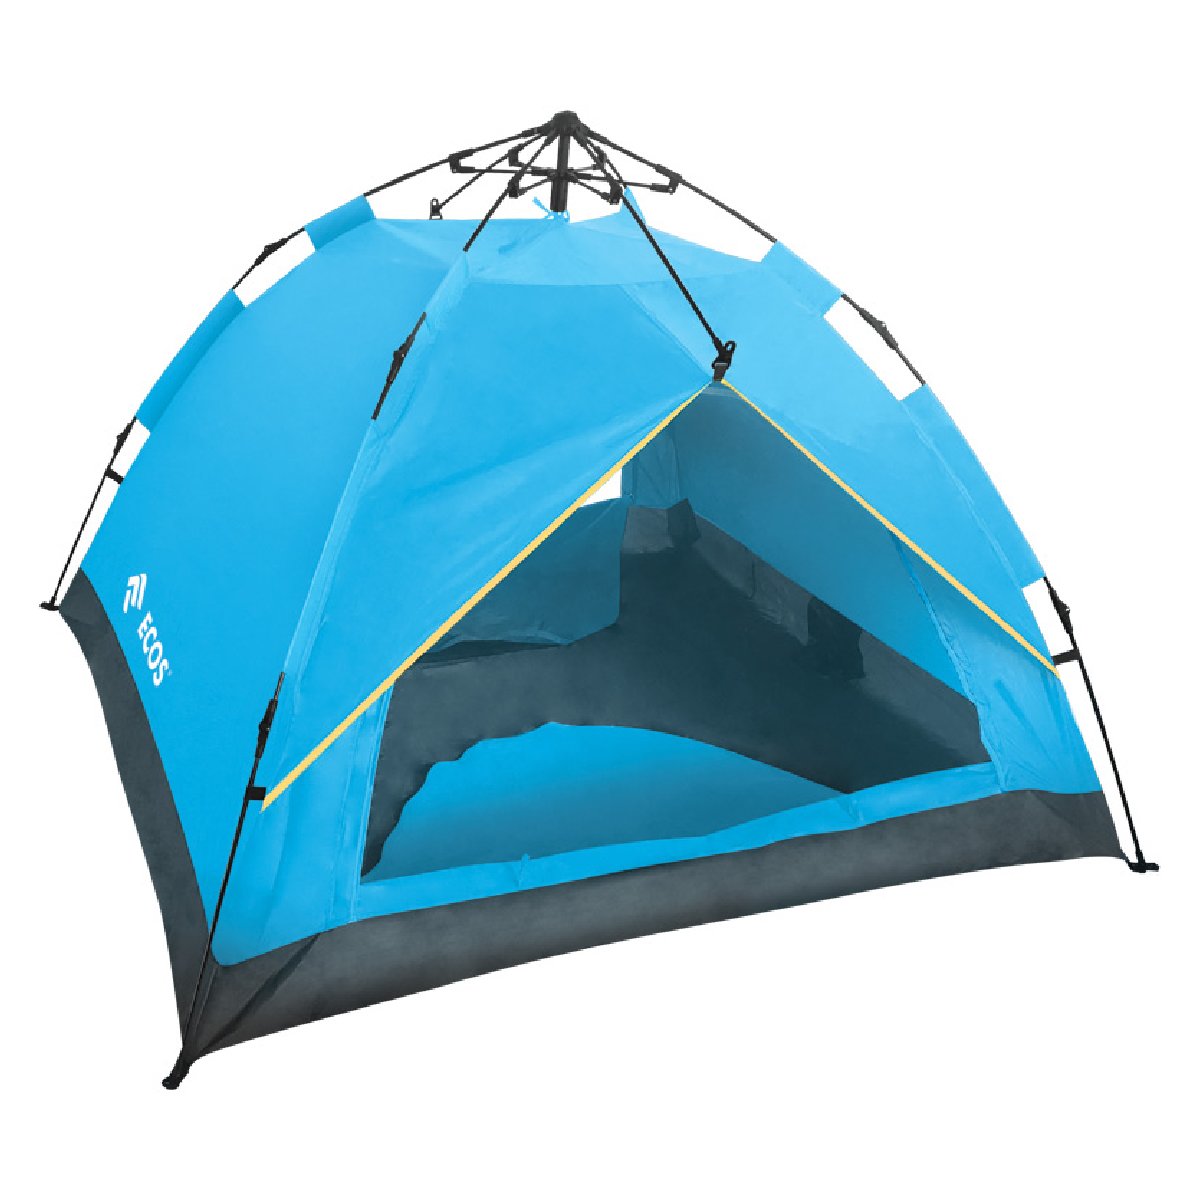 Палатка автоматическая Breeze (210х180х115см) (999205)